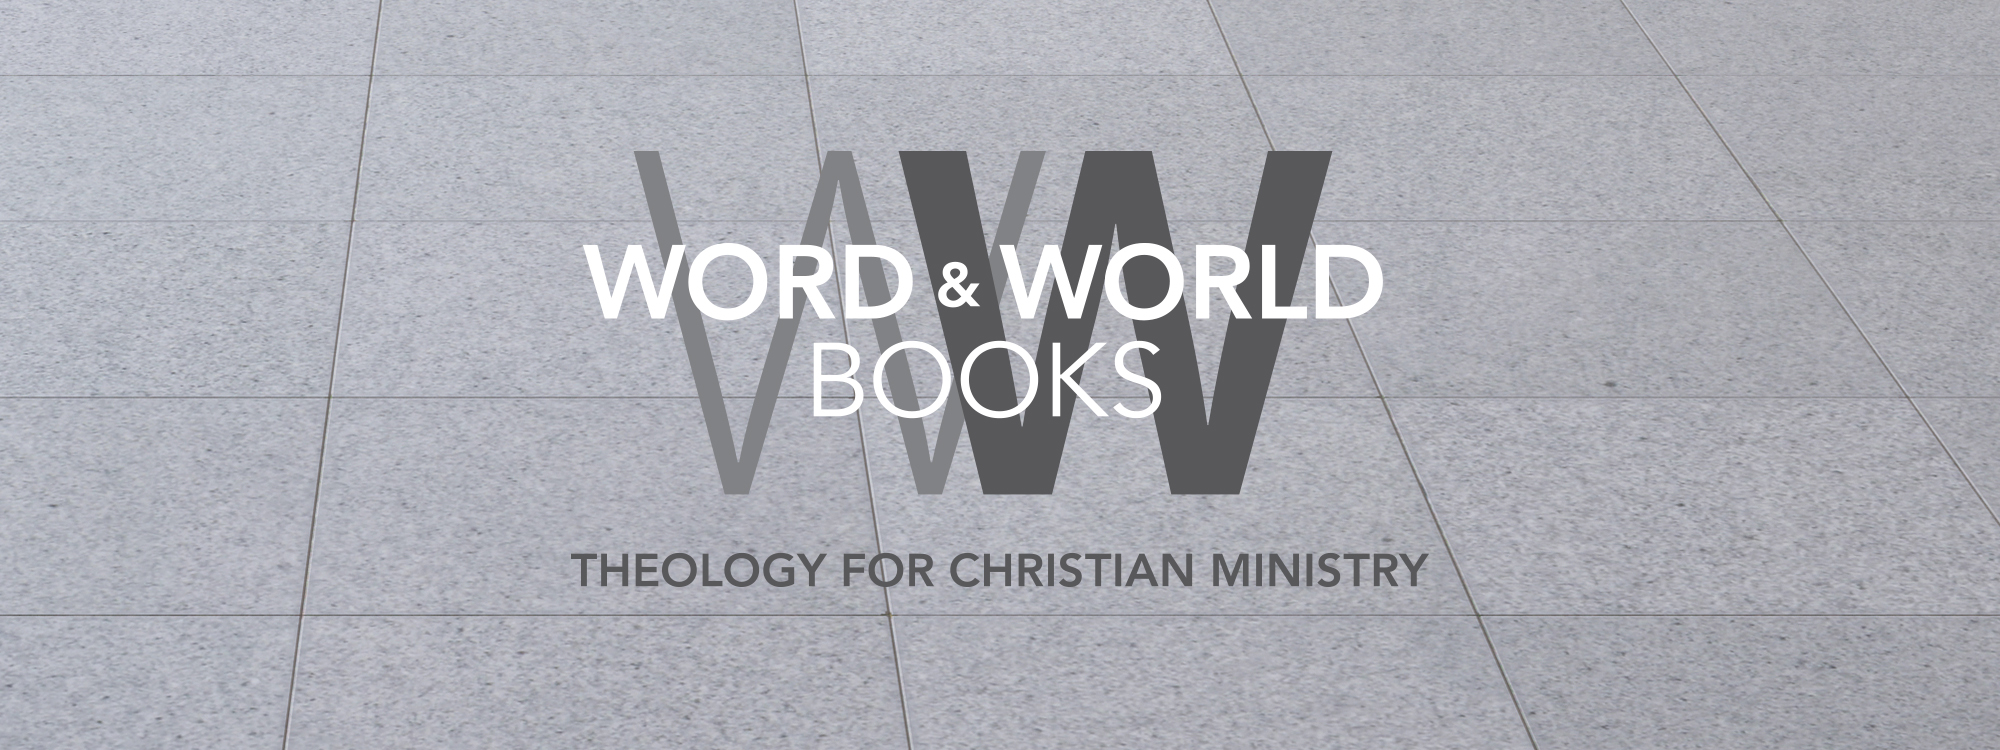 Word & World Books banner image